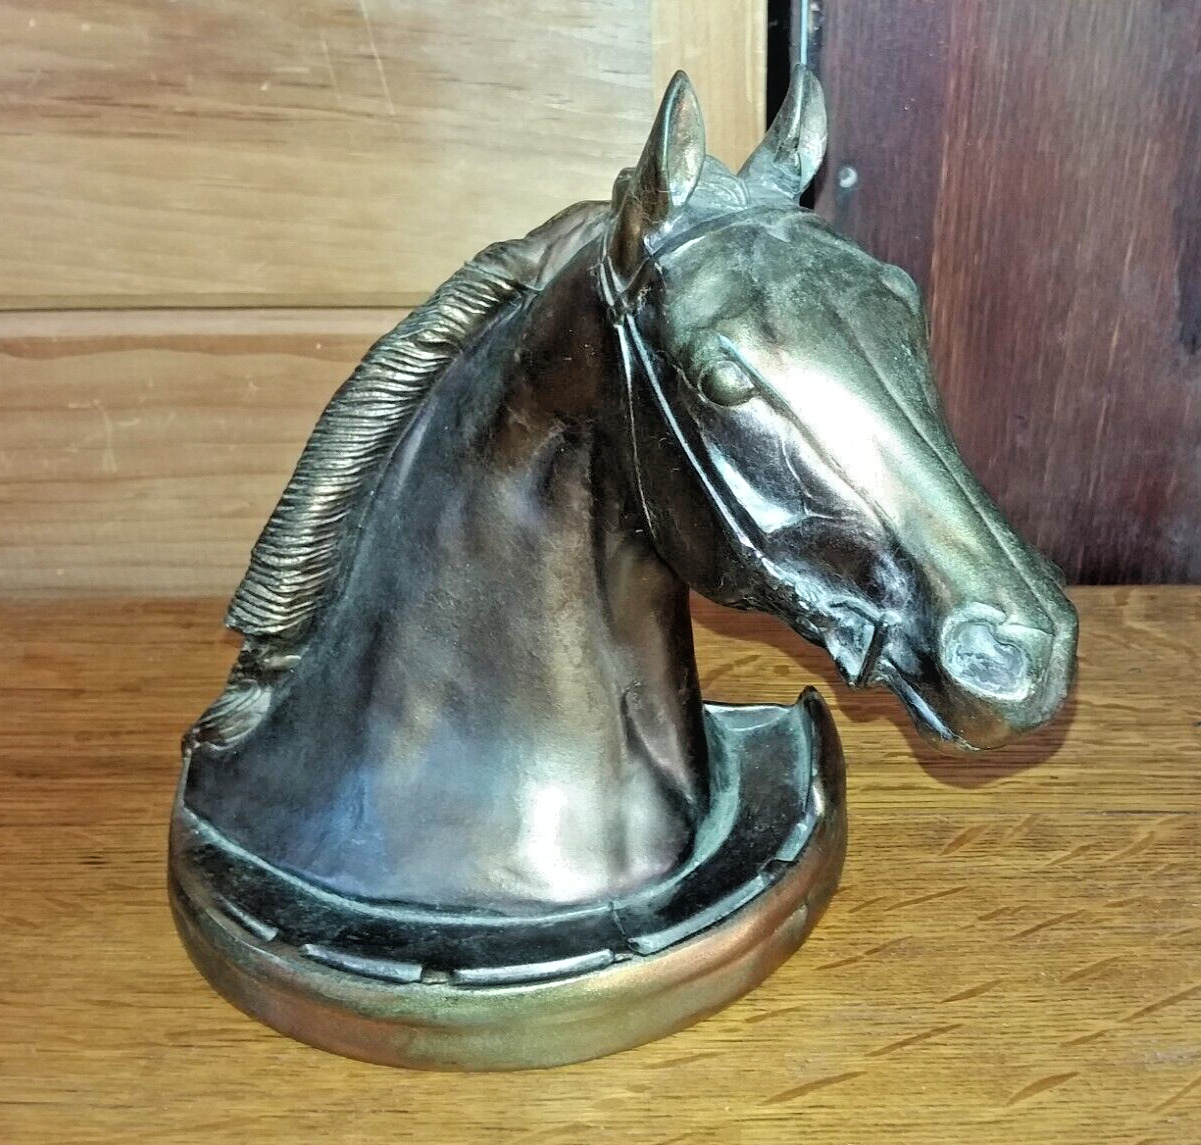 1946 Gladys Brown MORGAN HORSE bookend (singular) Dodge Forge Co. Bronze finish